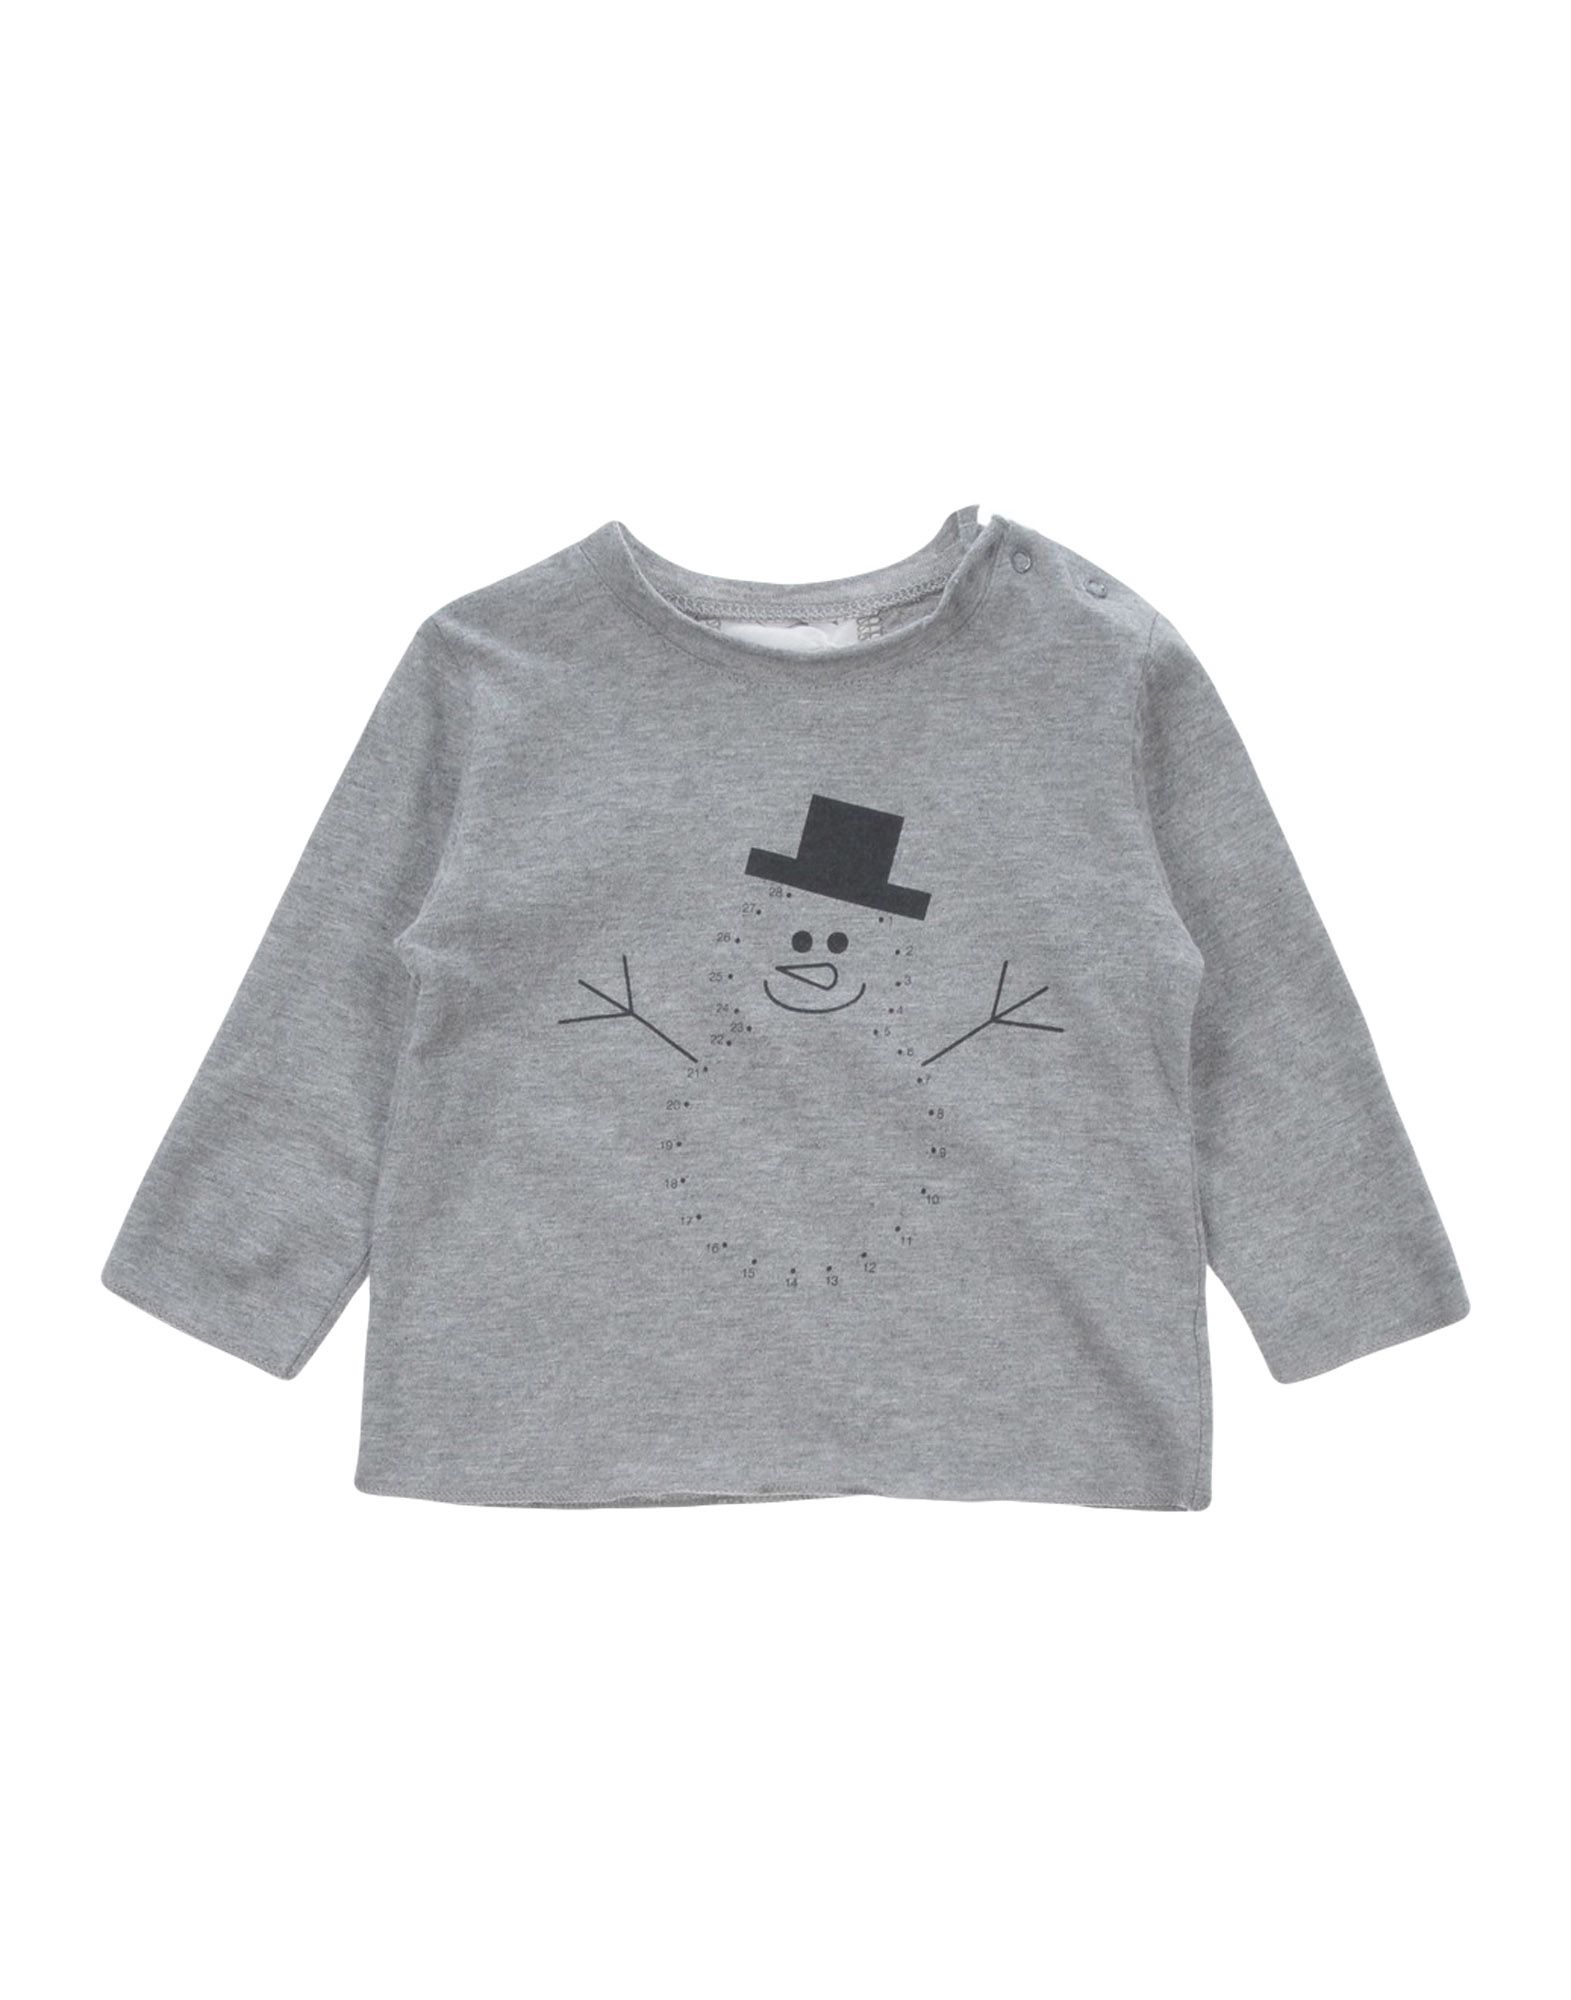 Frugoo Kids' T-shirts In Grey